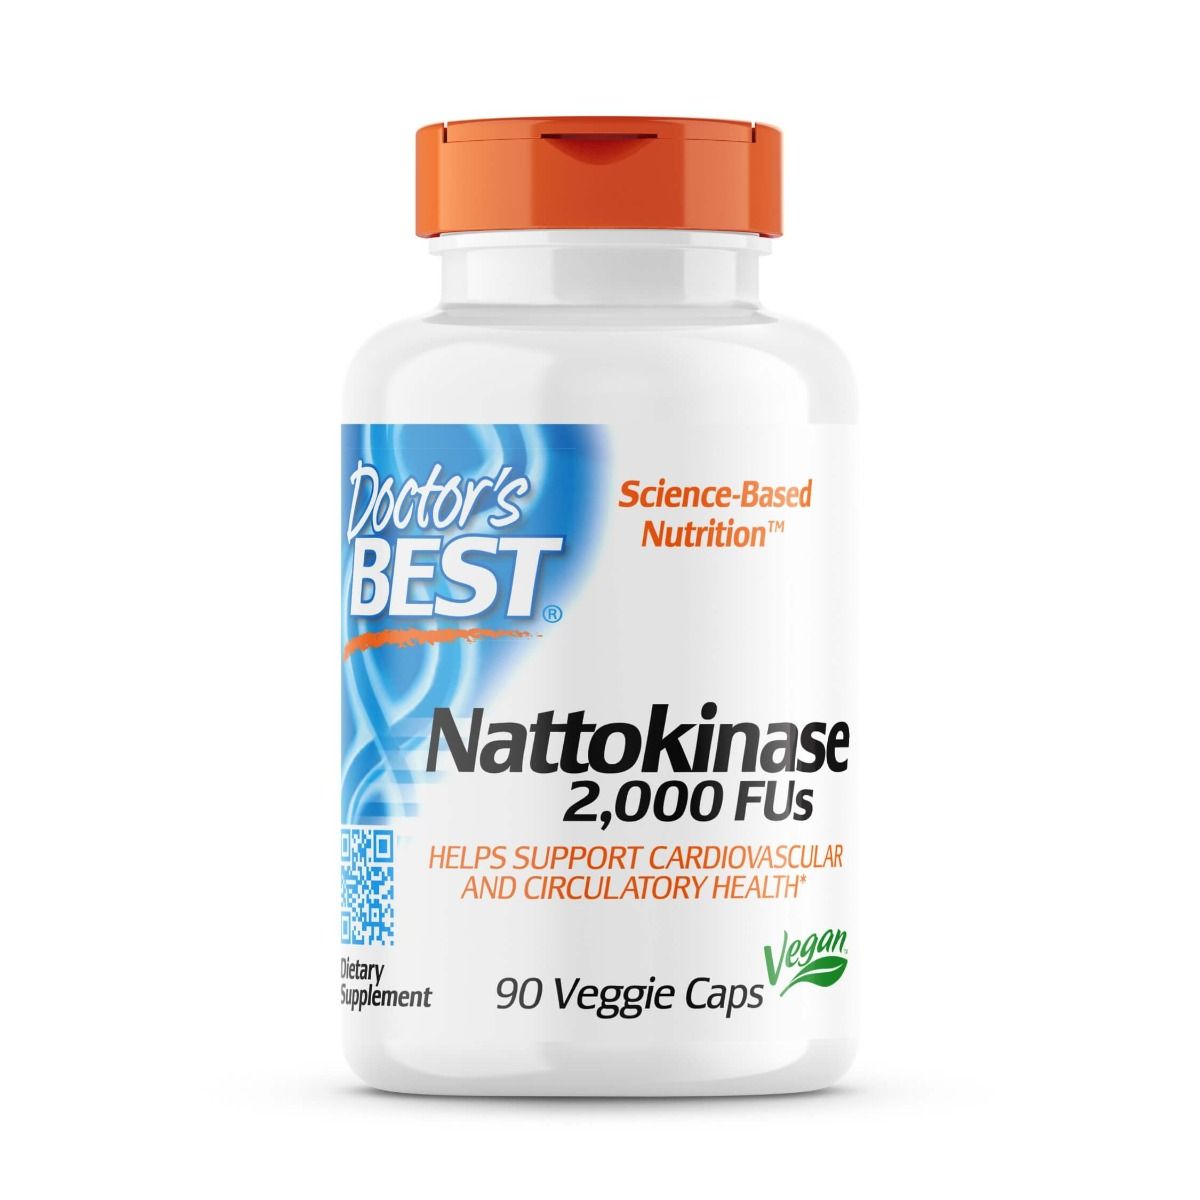 Doctor's Best Nattokinase 2,000 FUs 90 Veggie Capsules | Premium Supplements at MYSUPPLEMENTSHOP